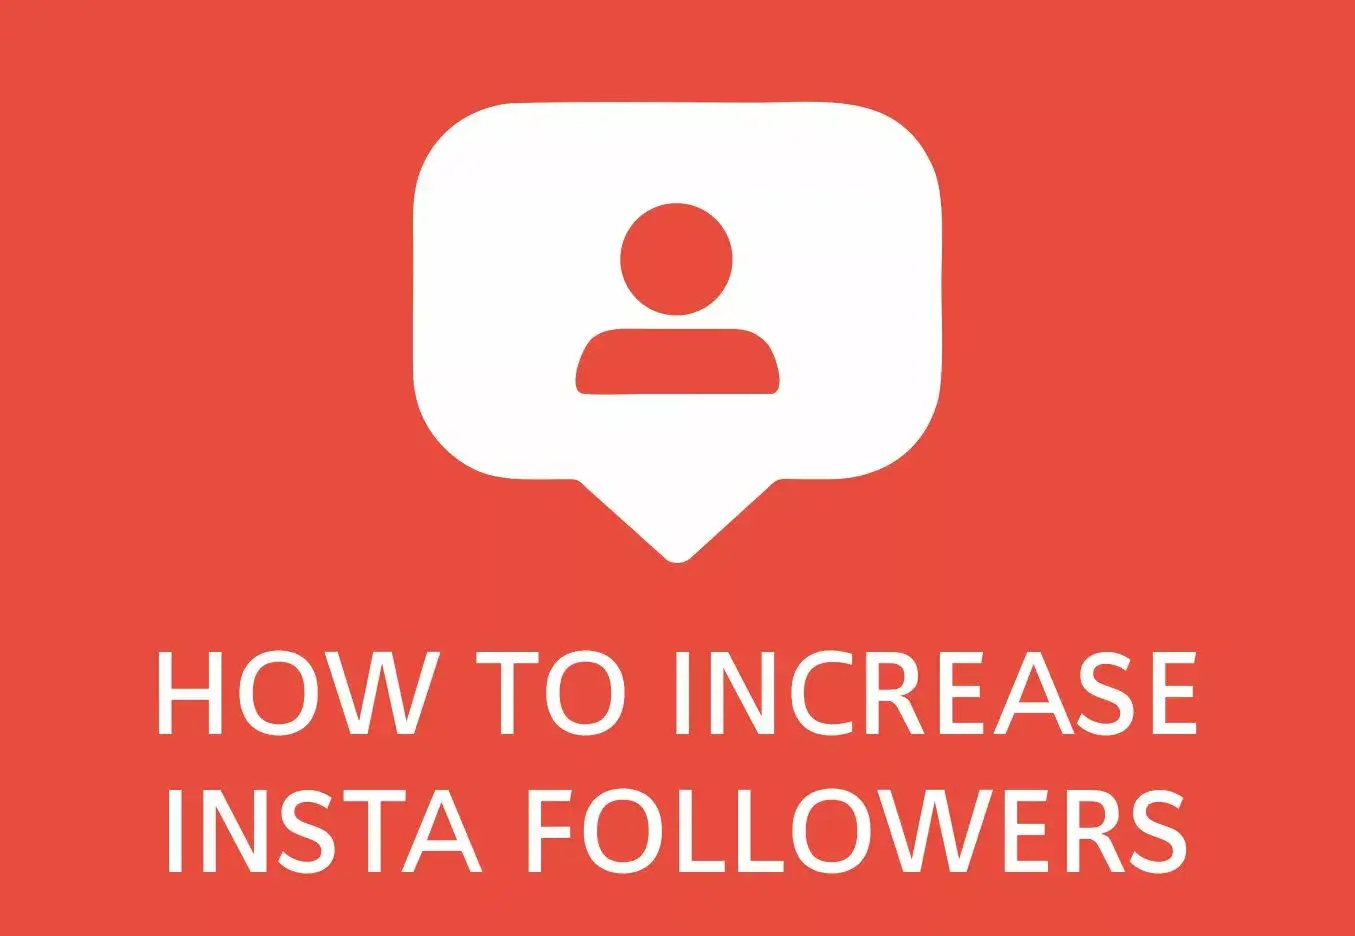 Increase Instagram followers